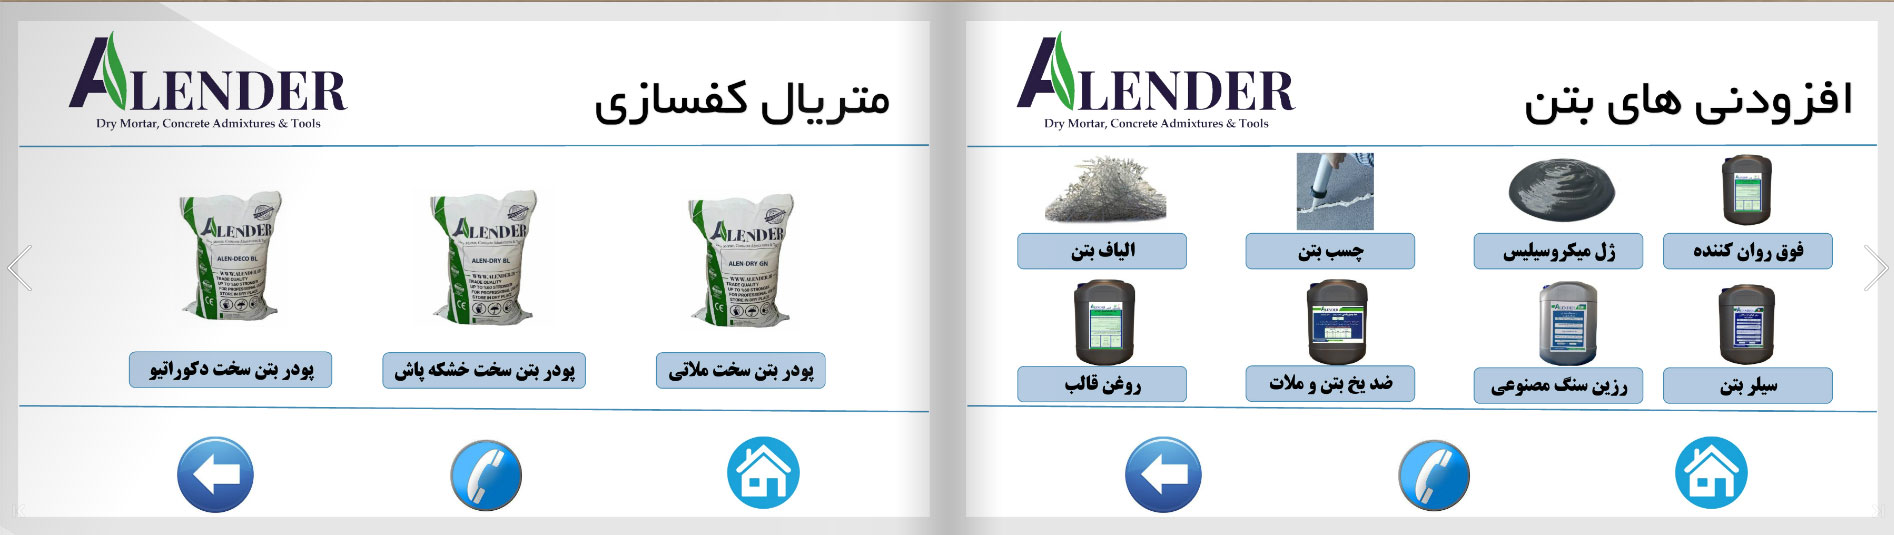 alender-concrete-company-product.jpg